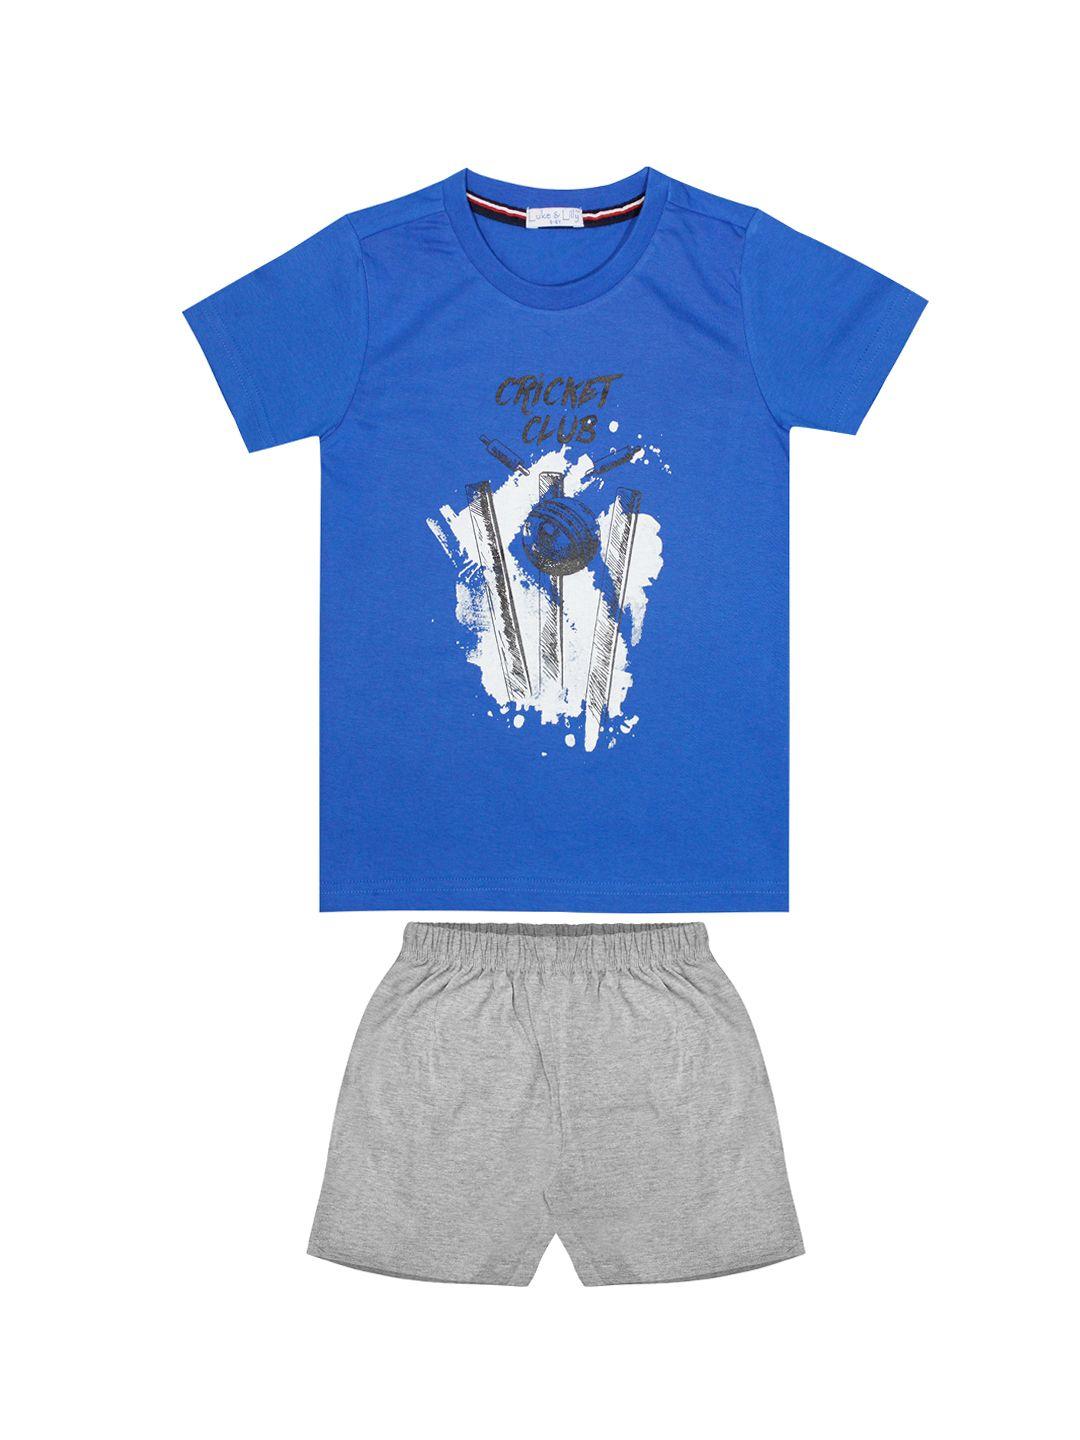 luke-&-lilly-boys-blue-&-grey-printed-clothing-set